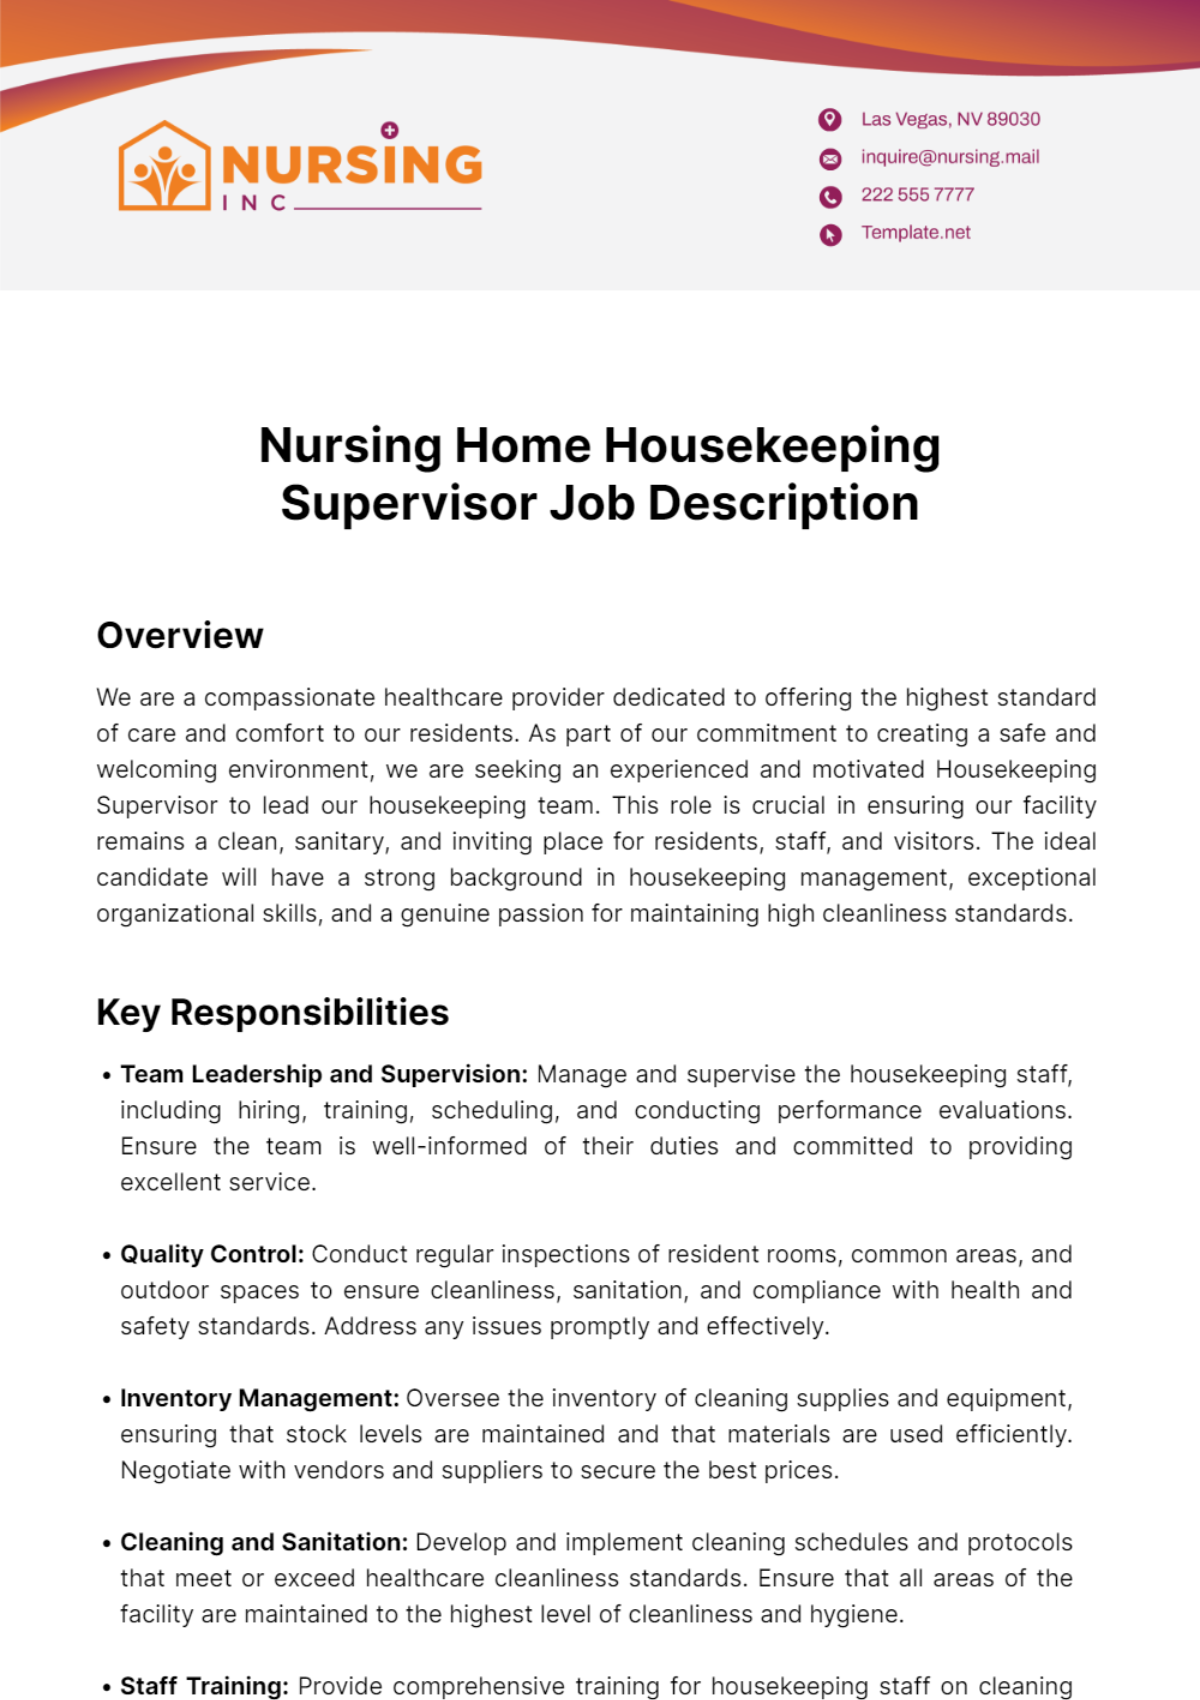 Nursing Home Housekeeping Supervisor Job Description Template